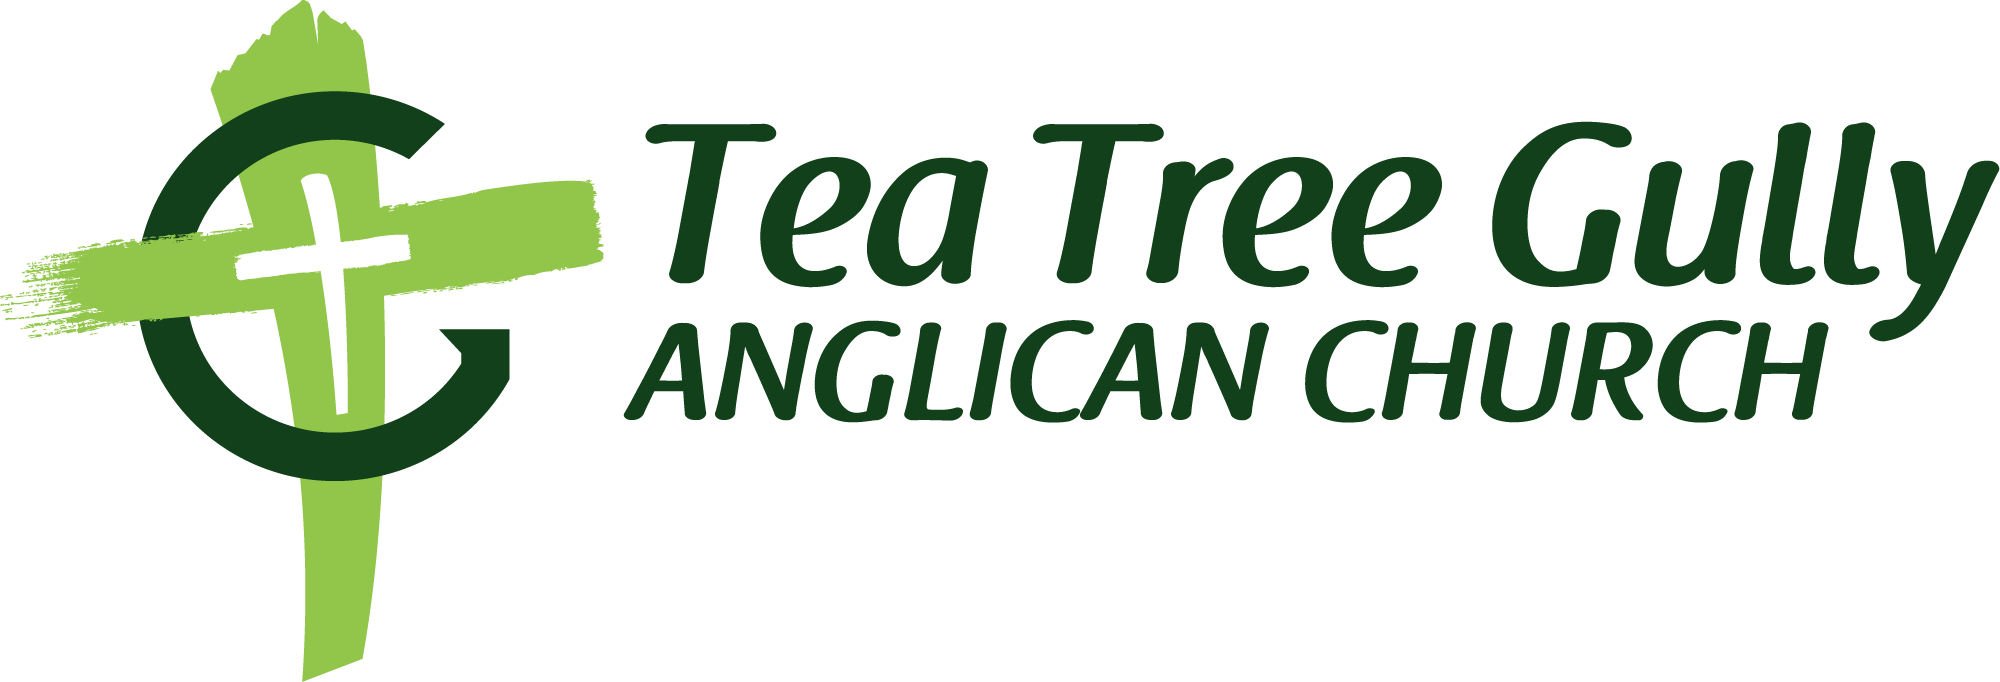 Tea Tree Gully Anglican Church